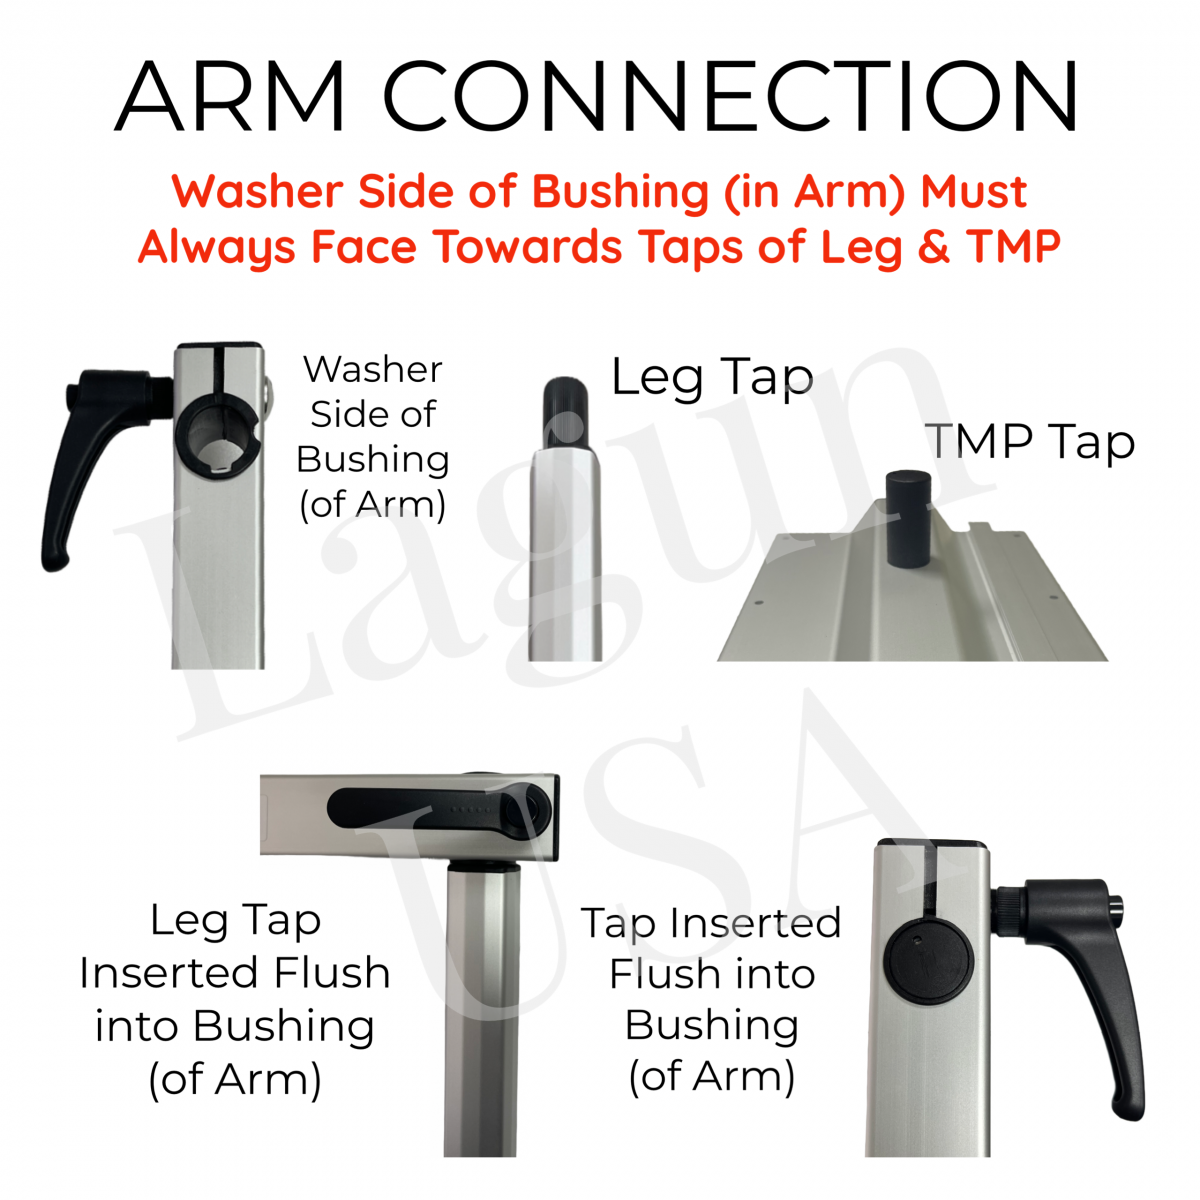 ARM CONNECTION